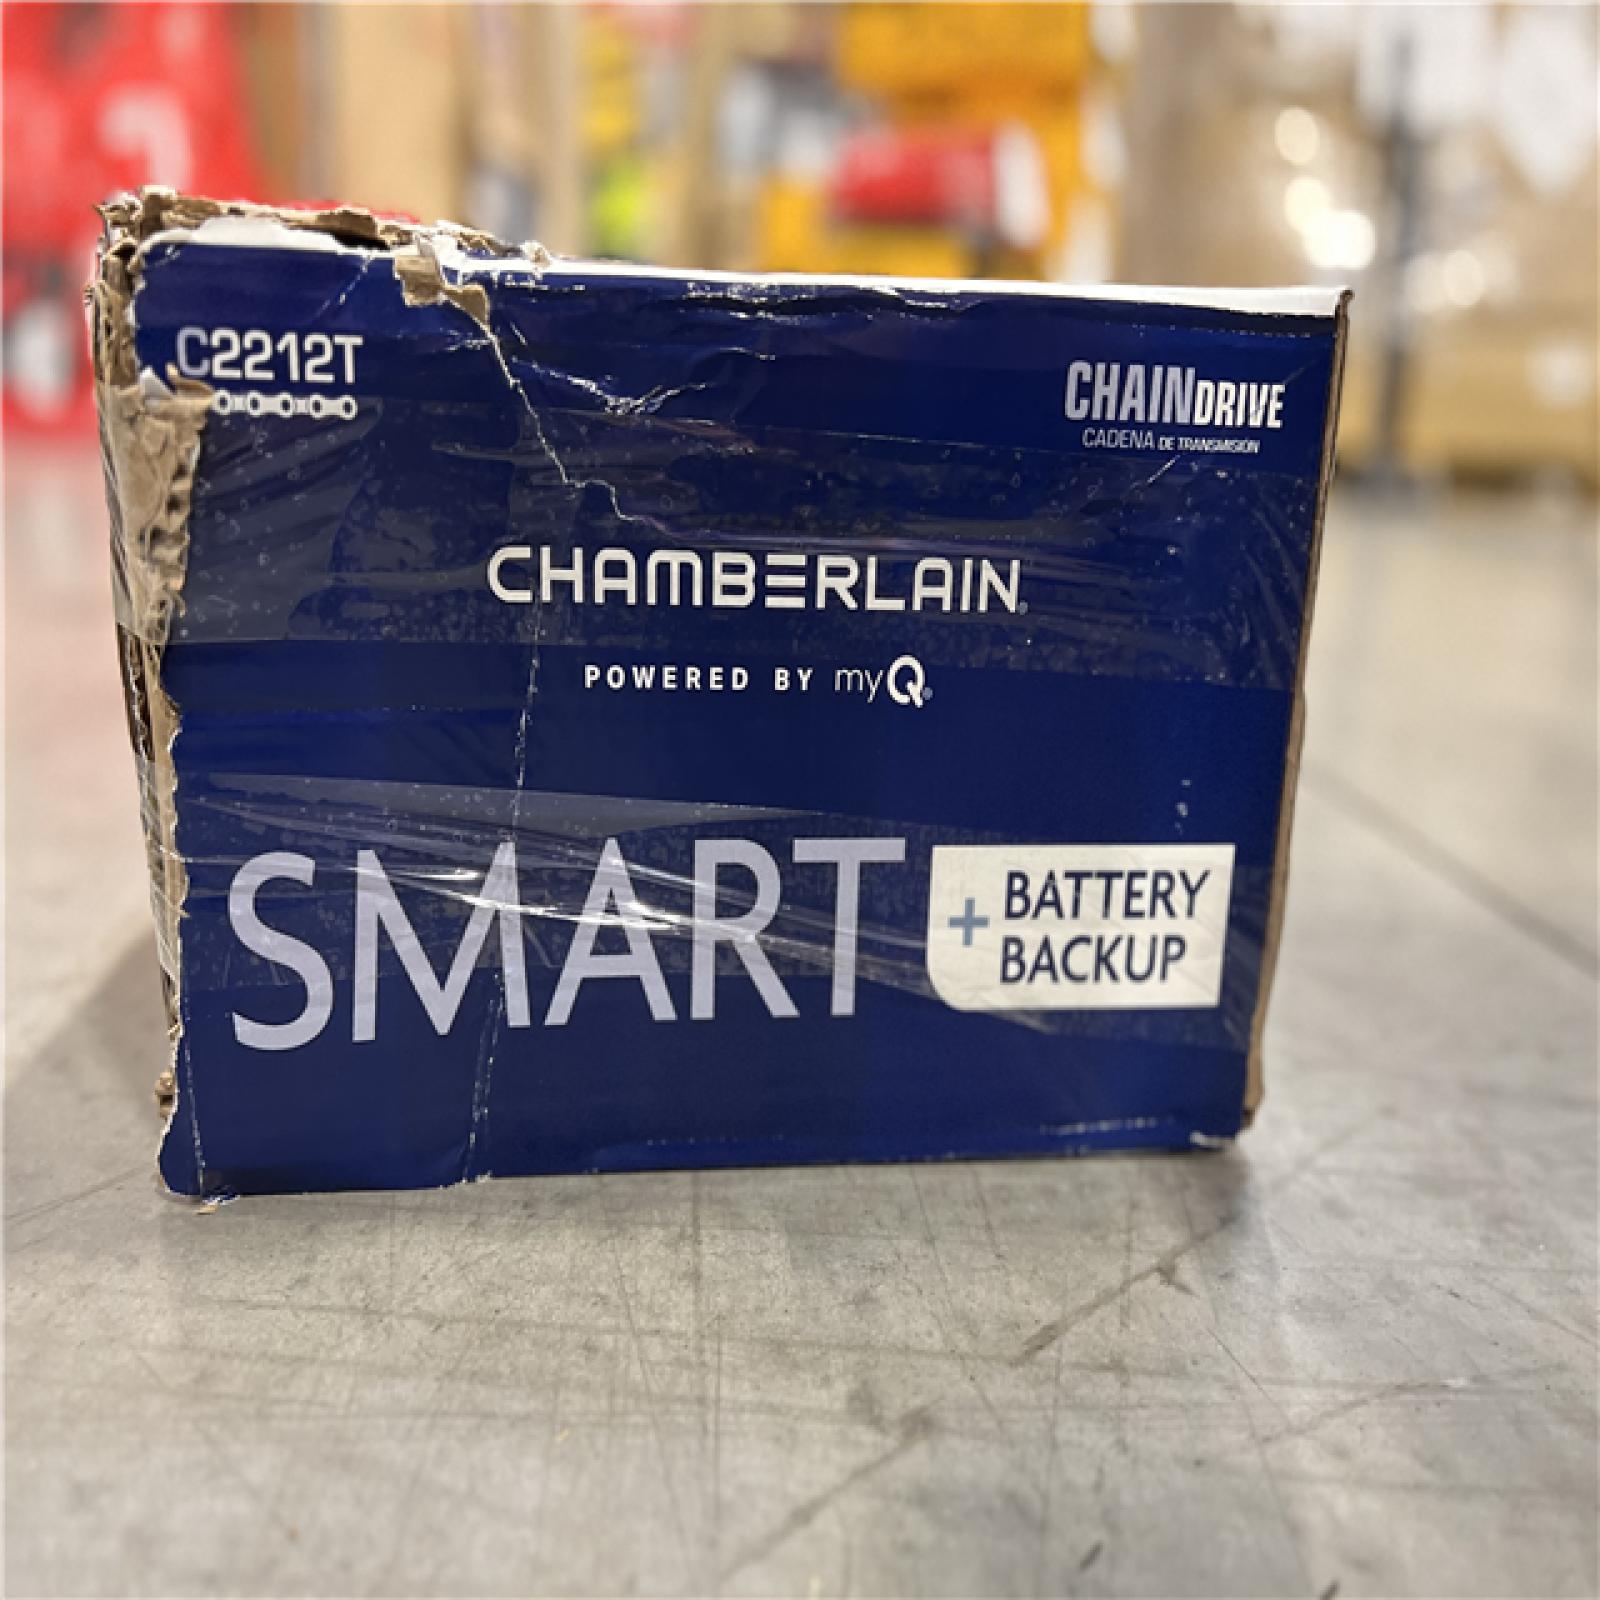 AS-IS - Chamberlain C2212T 1/2 HP Smart Chain Drive Garage Door Opener with Battery Backup